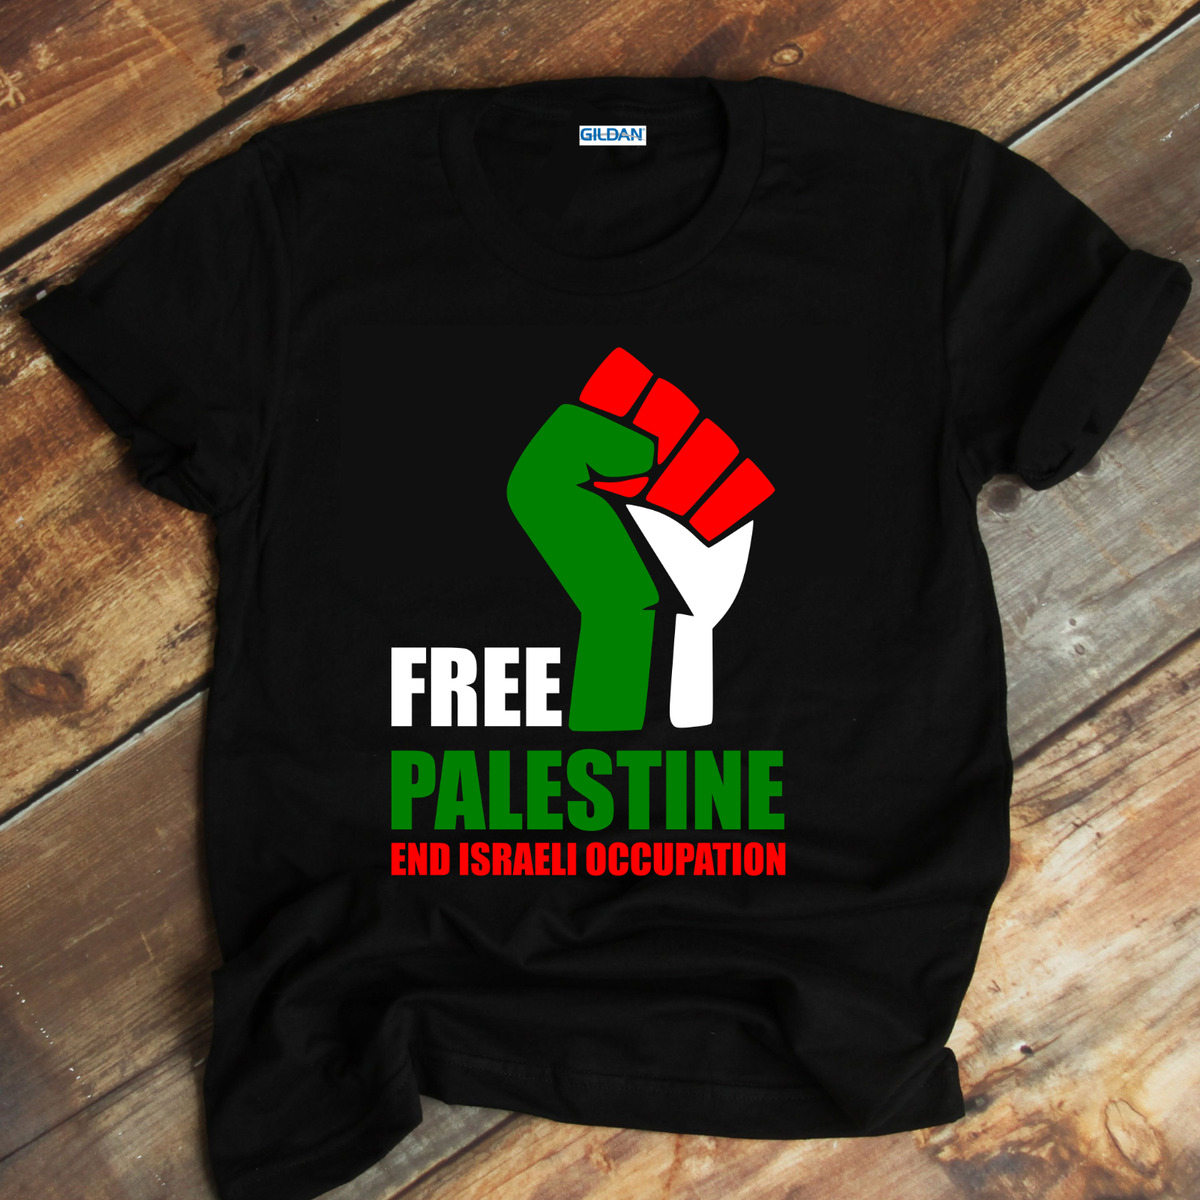 baard Bengelen fluweel Free Palestine T-Shirt Gaza Freedom End Israeli Occupation Unisex Top | eBay